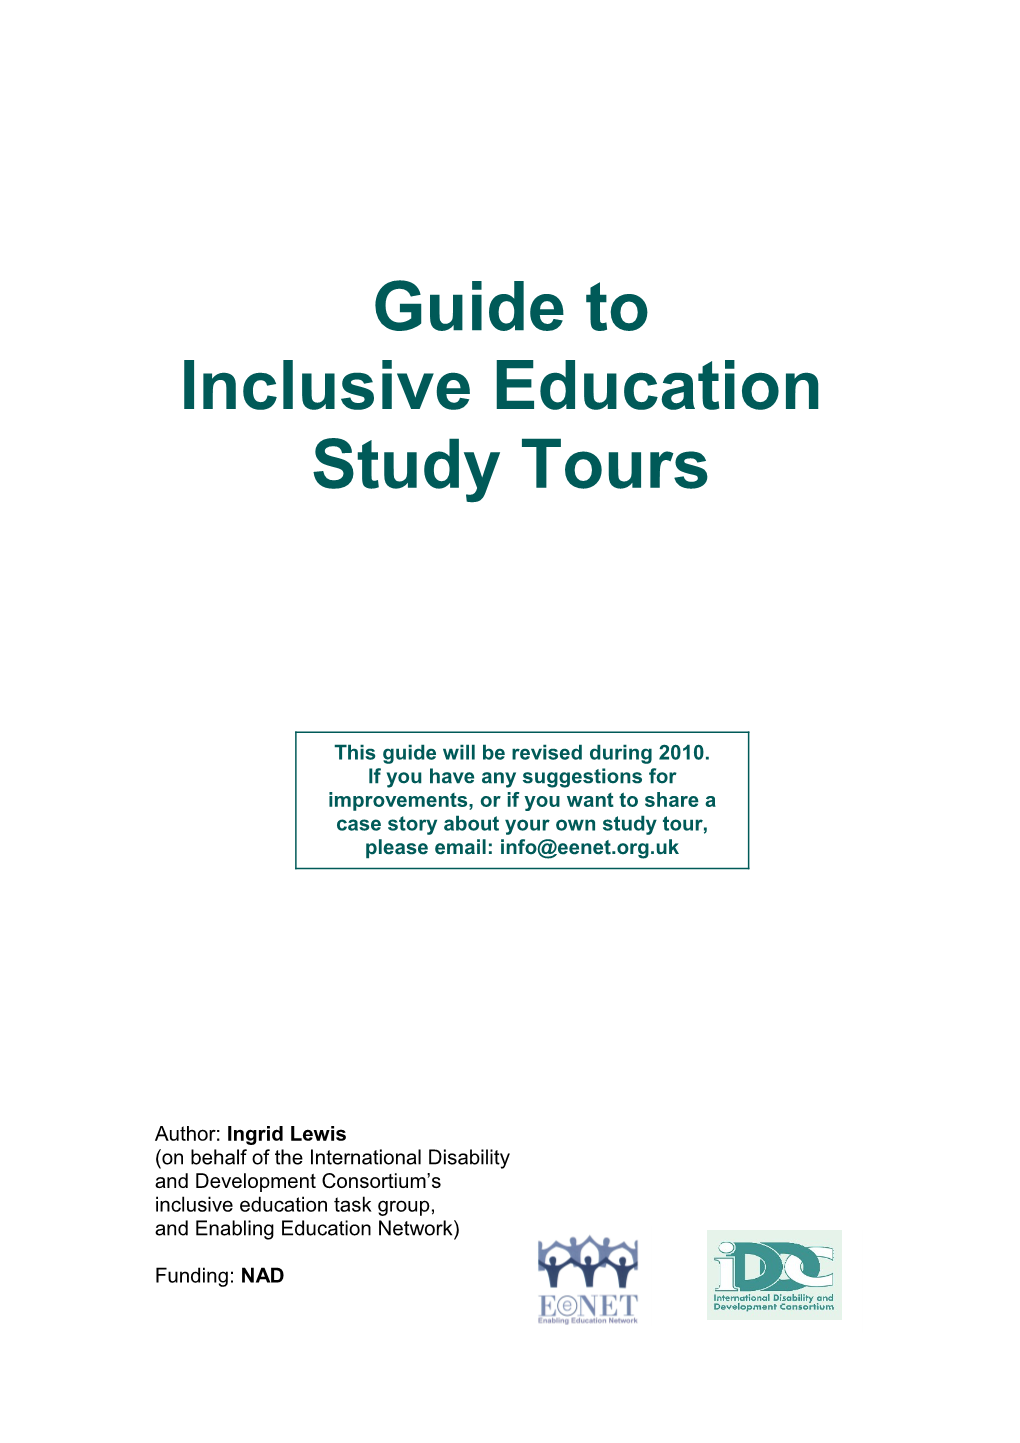 Inclusive Education Study Tours: a Guide